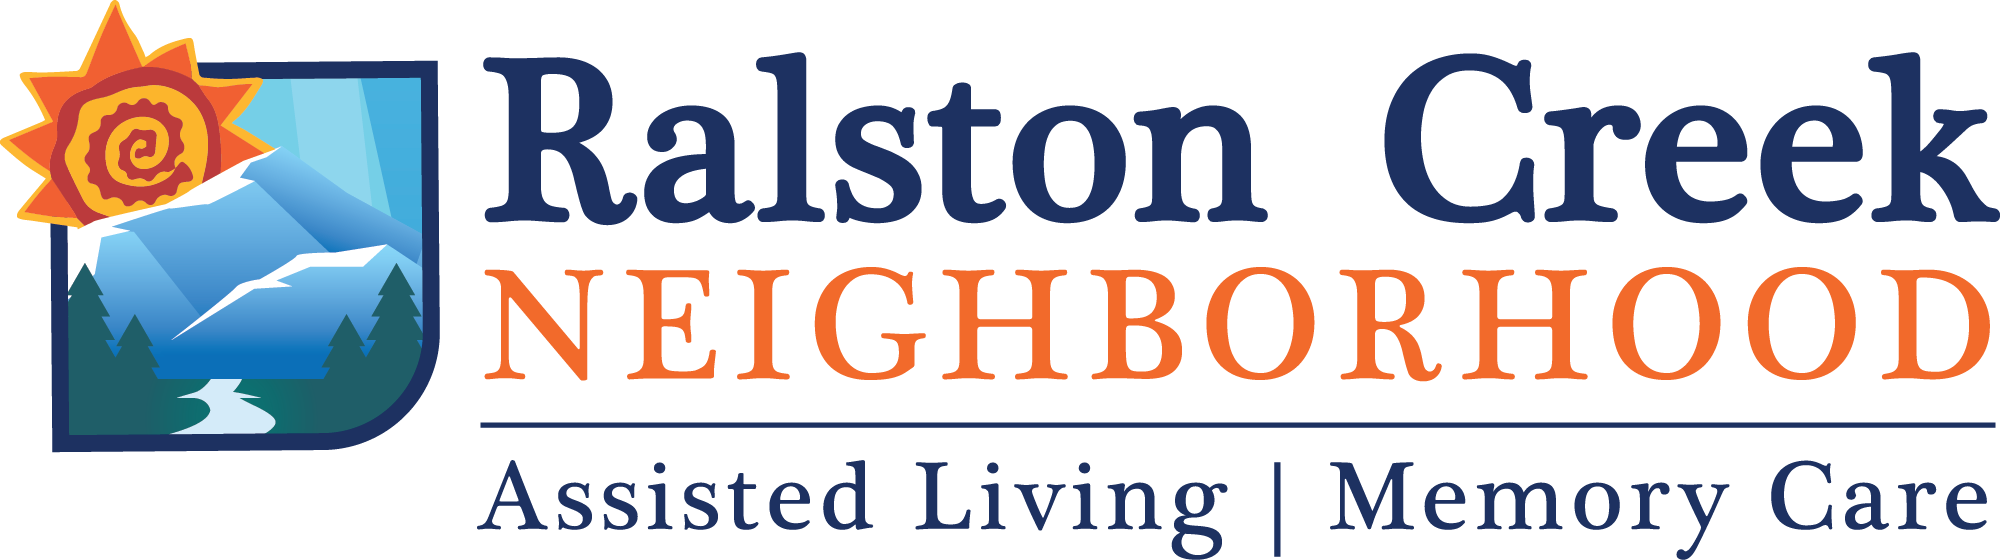 Ralston Creek Neighborhood Assisted Living &amp; Memory Care